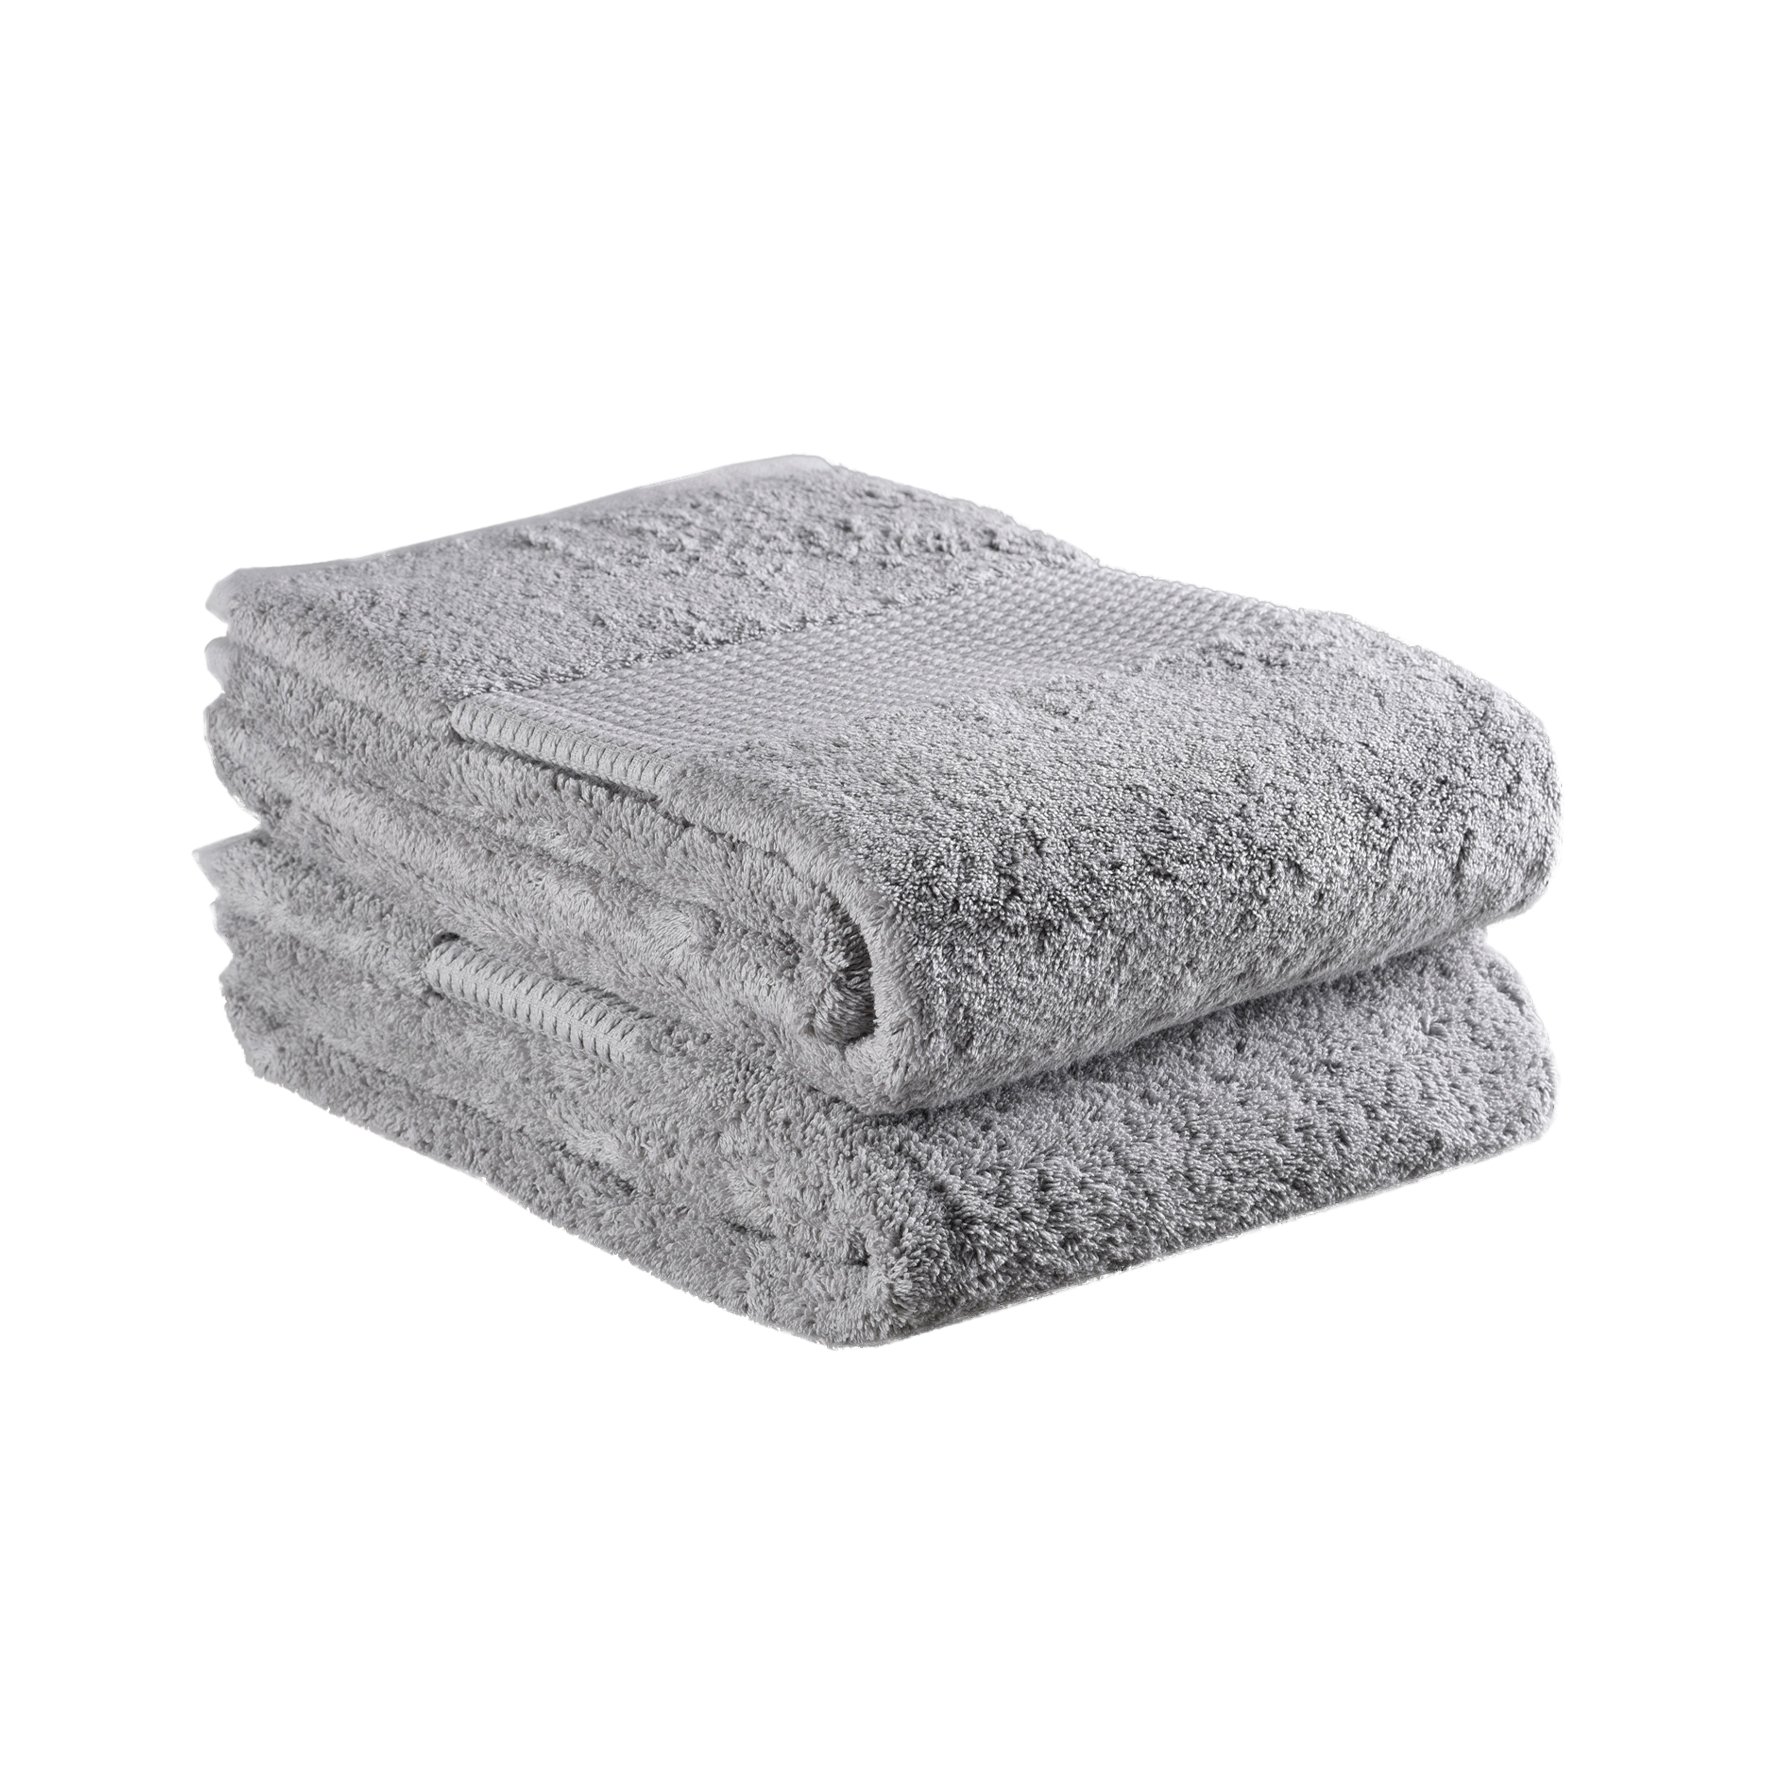 Delilah Home DHT-100103 Light Gray Organic Cotton Towel